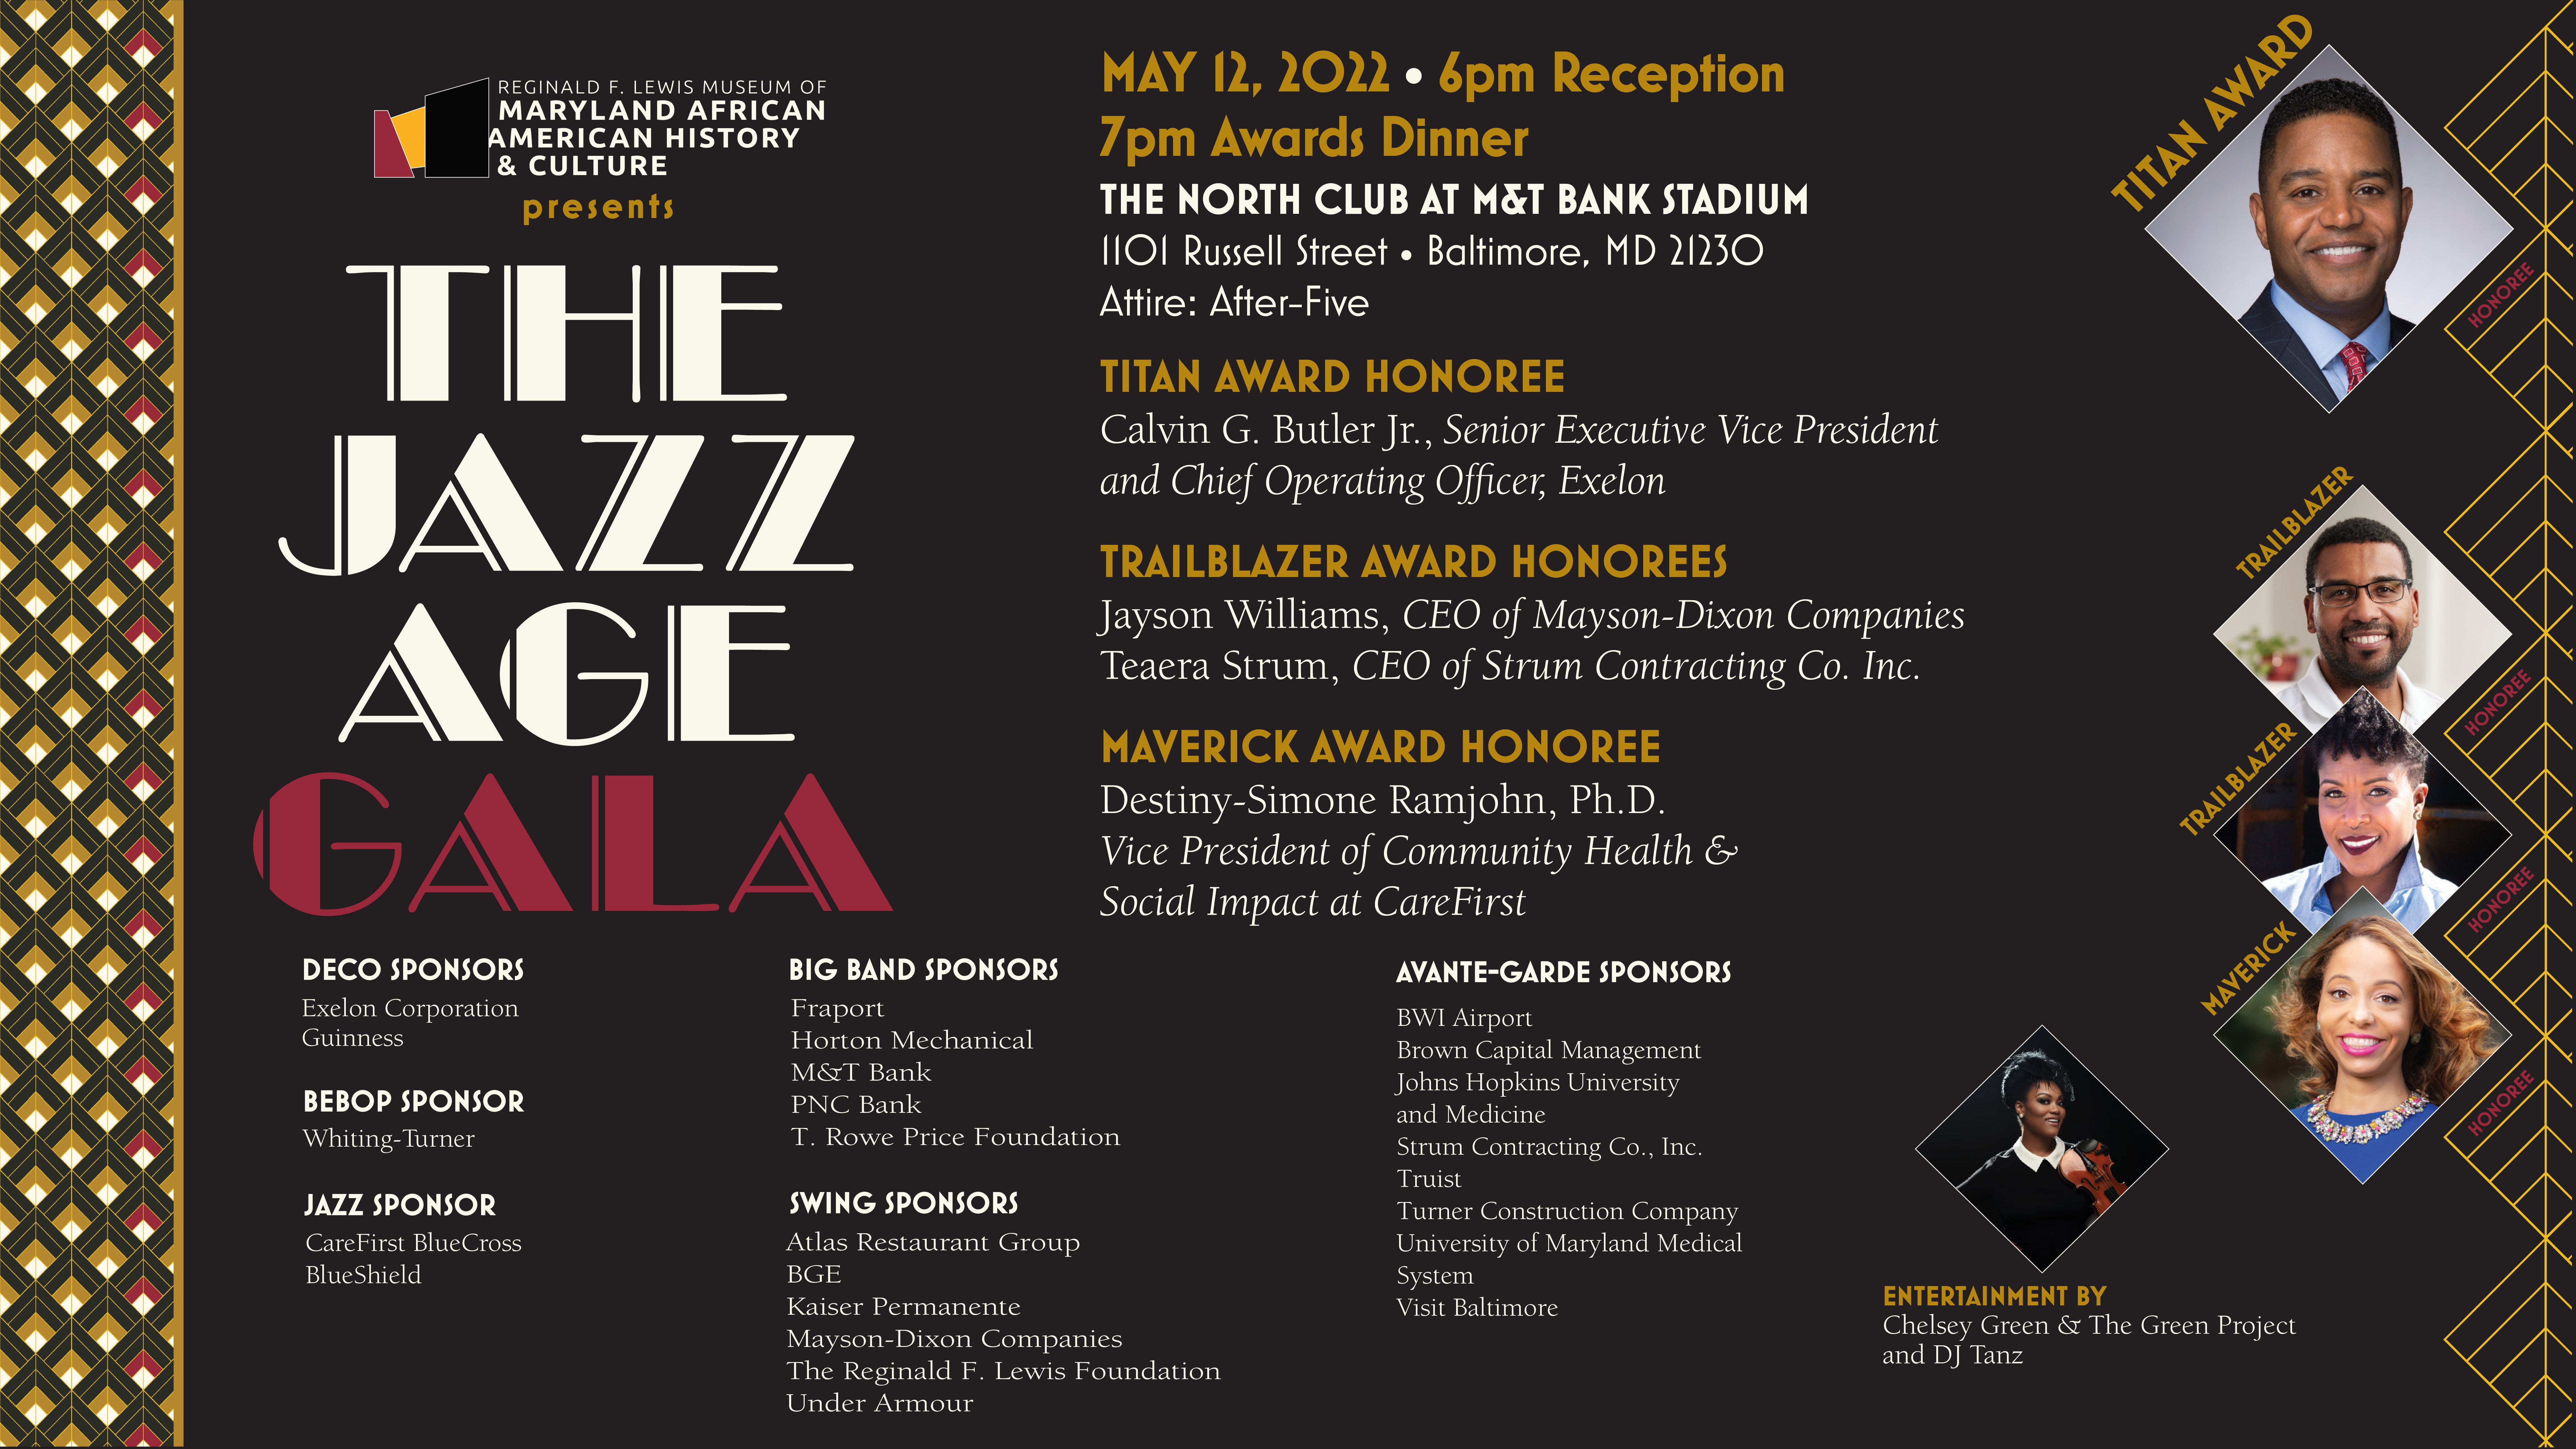 The Jazz Age Gala